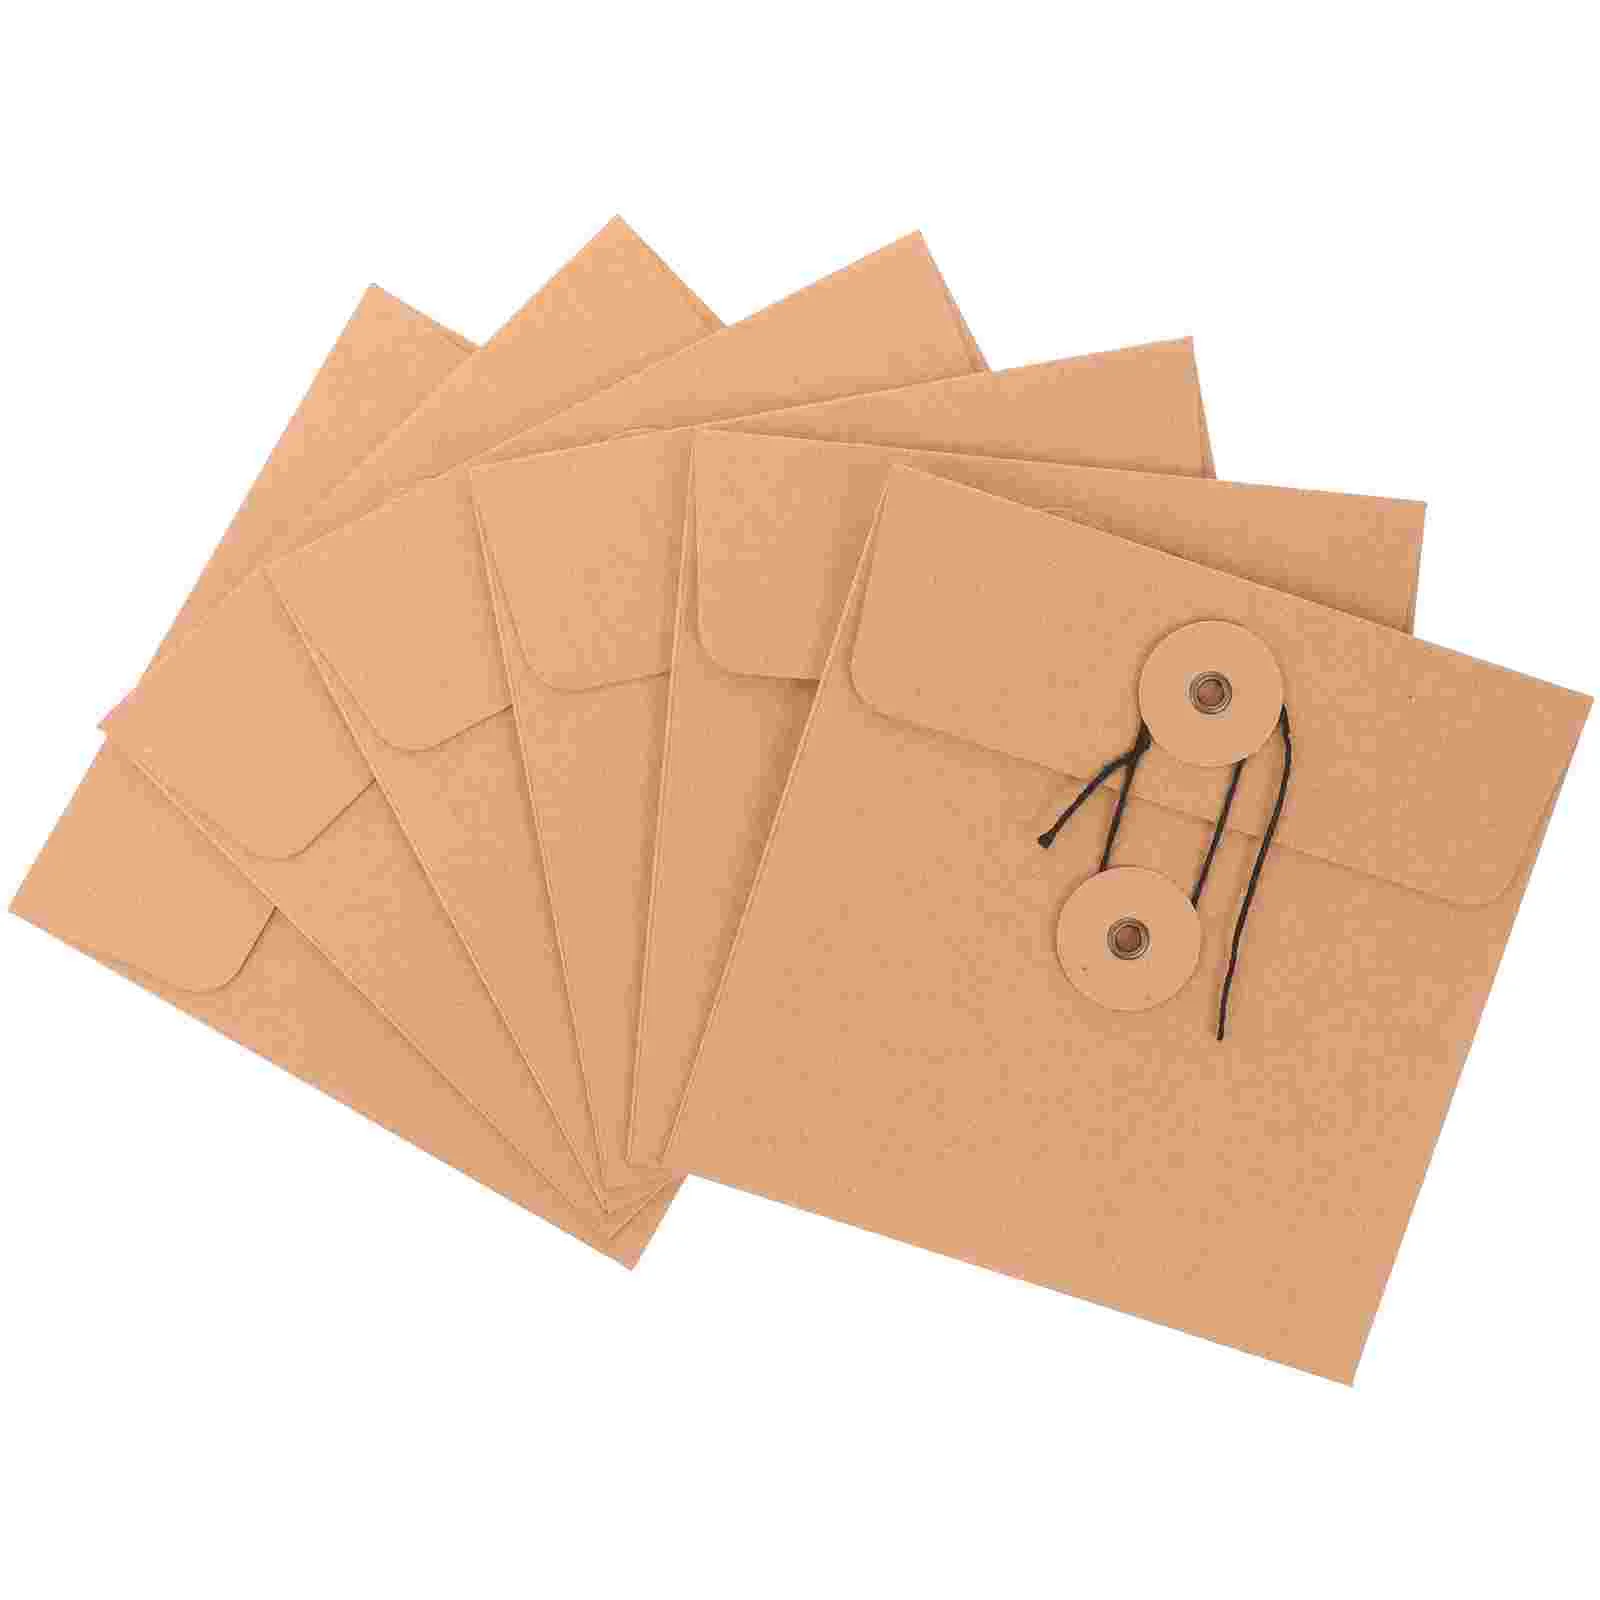 

10 Pcs Kraft Envelope Envelopes Dvd Sleeves CD Covers Packaging Bag Paper Storage Holder